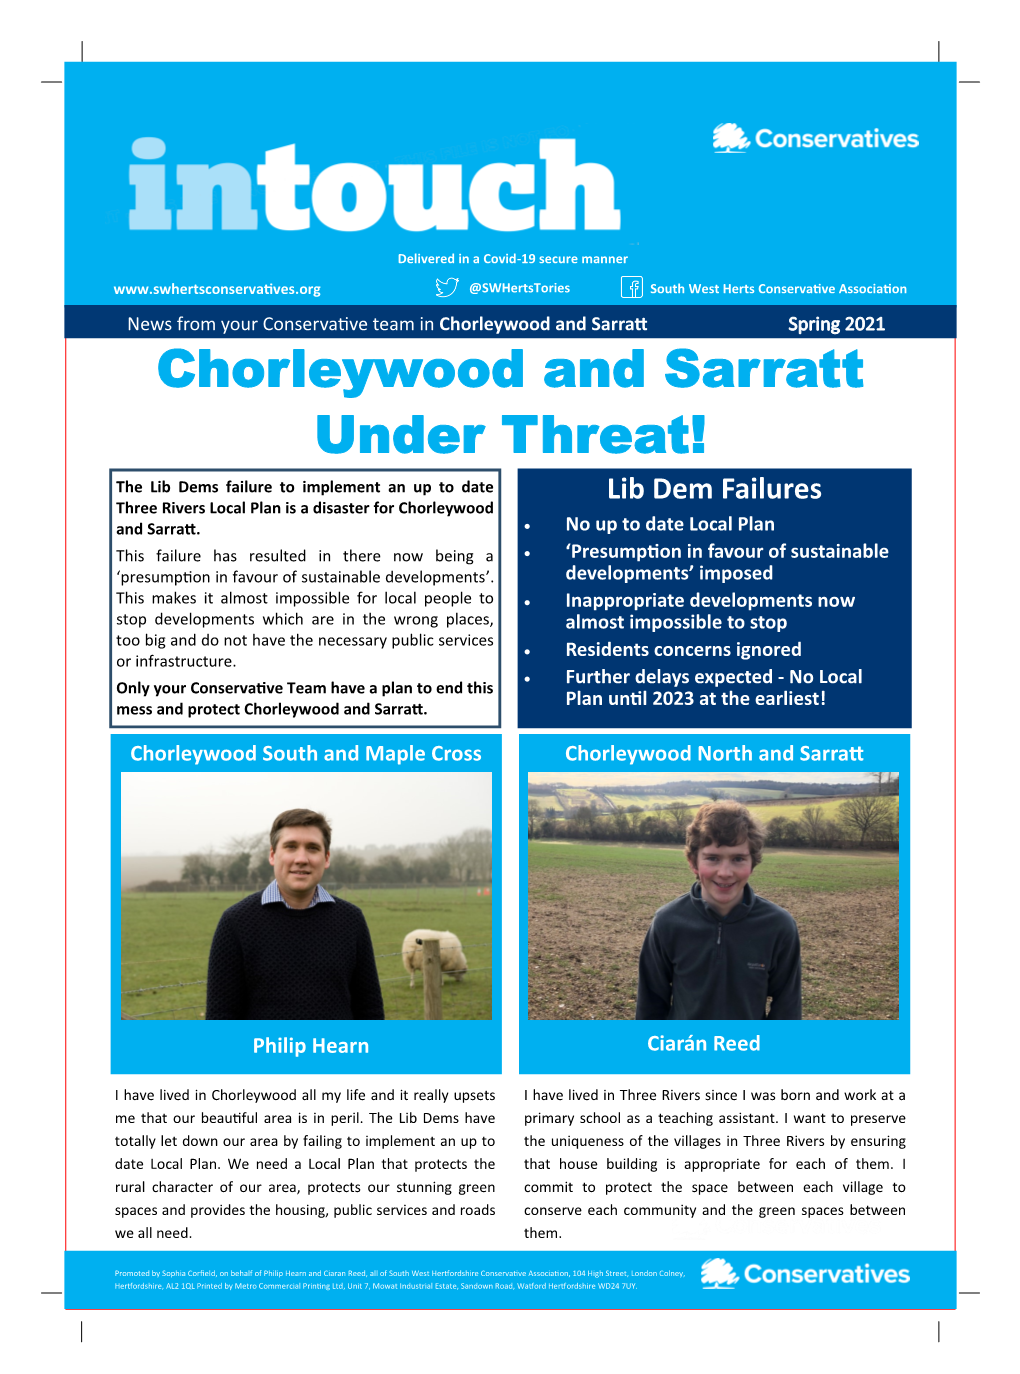 Chorleywood and Sarratt Under Threat!